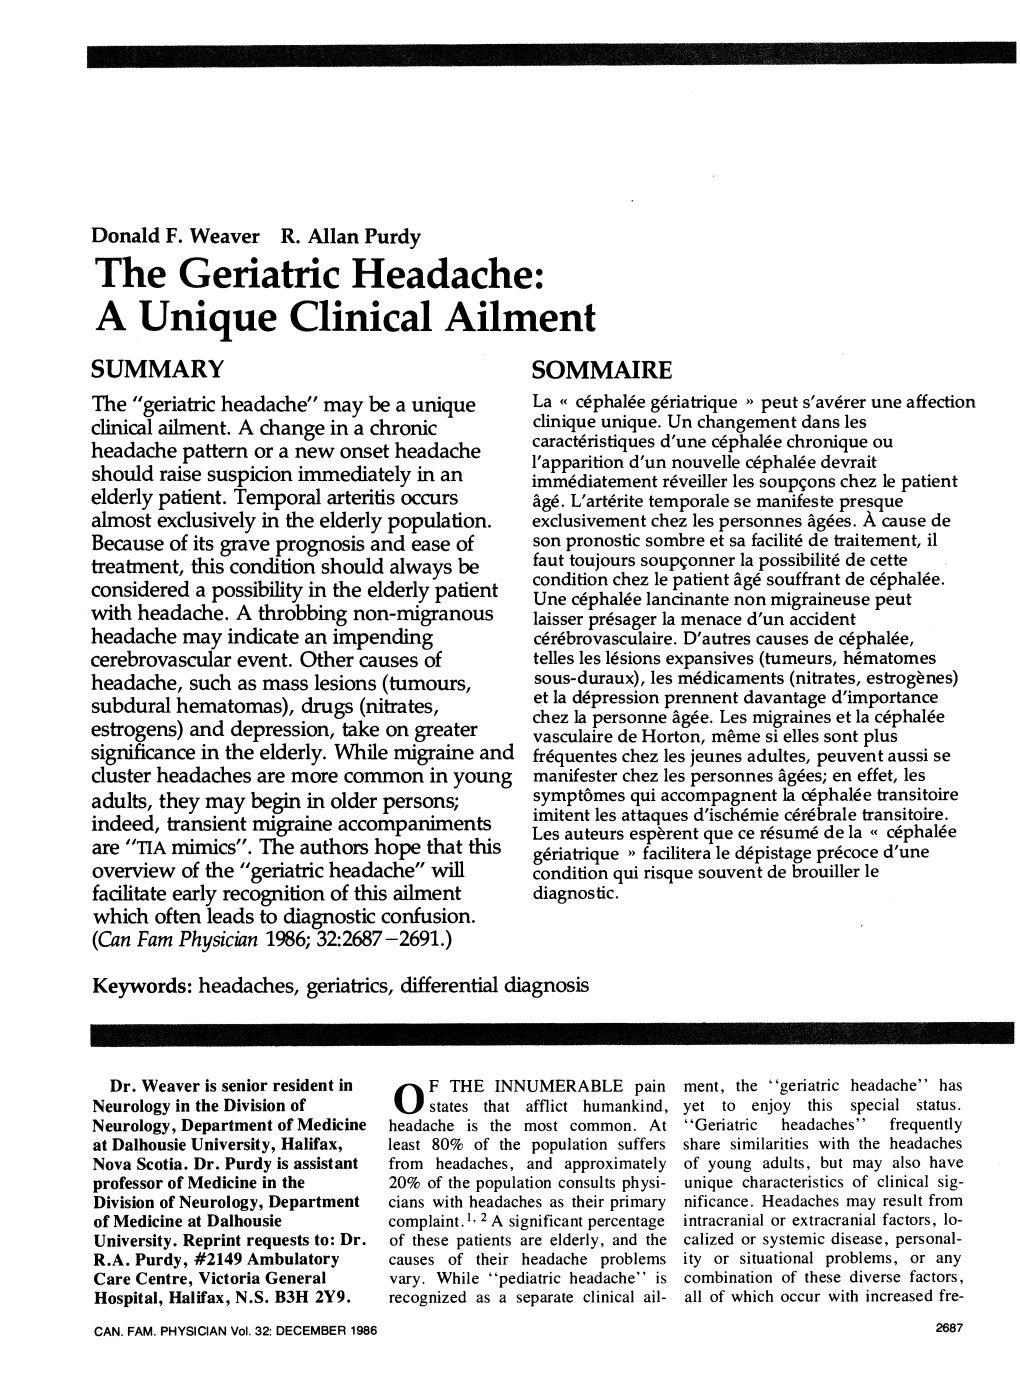 The Gernatric Headache